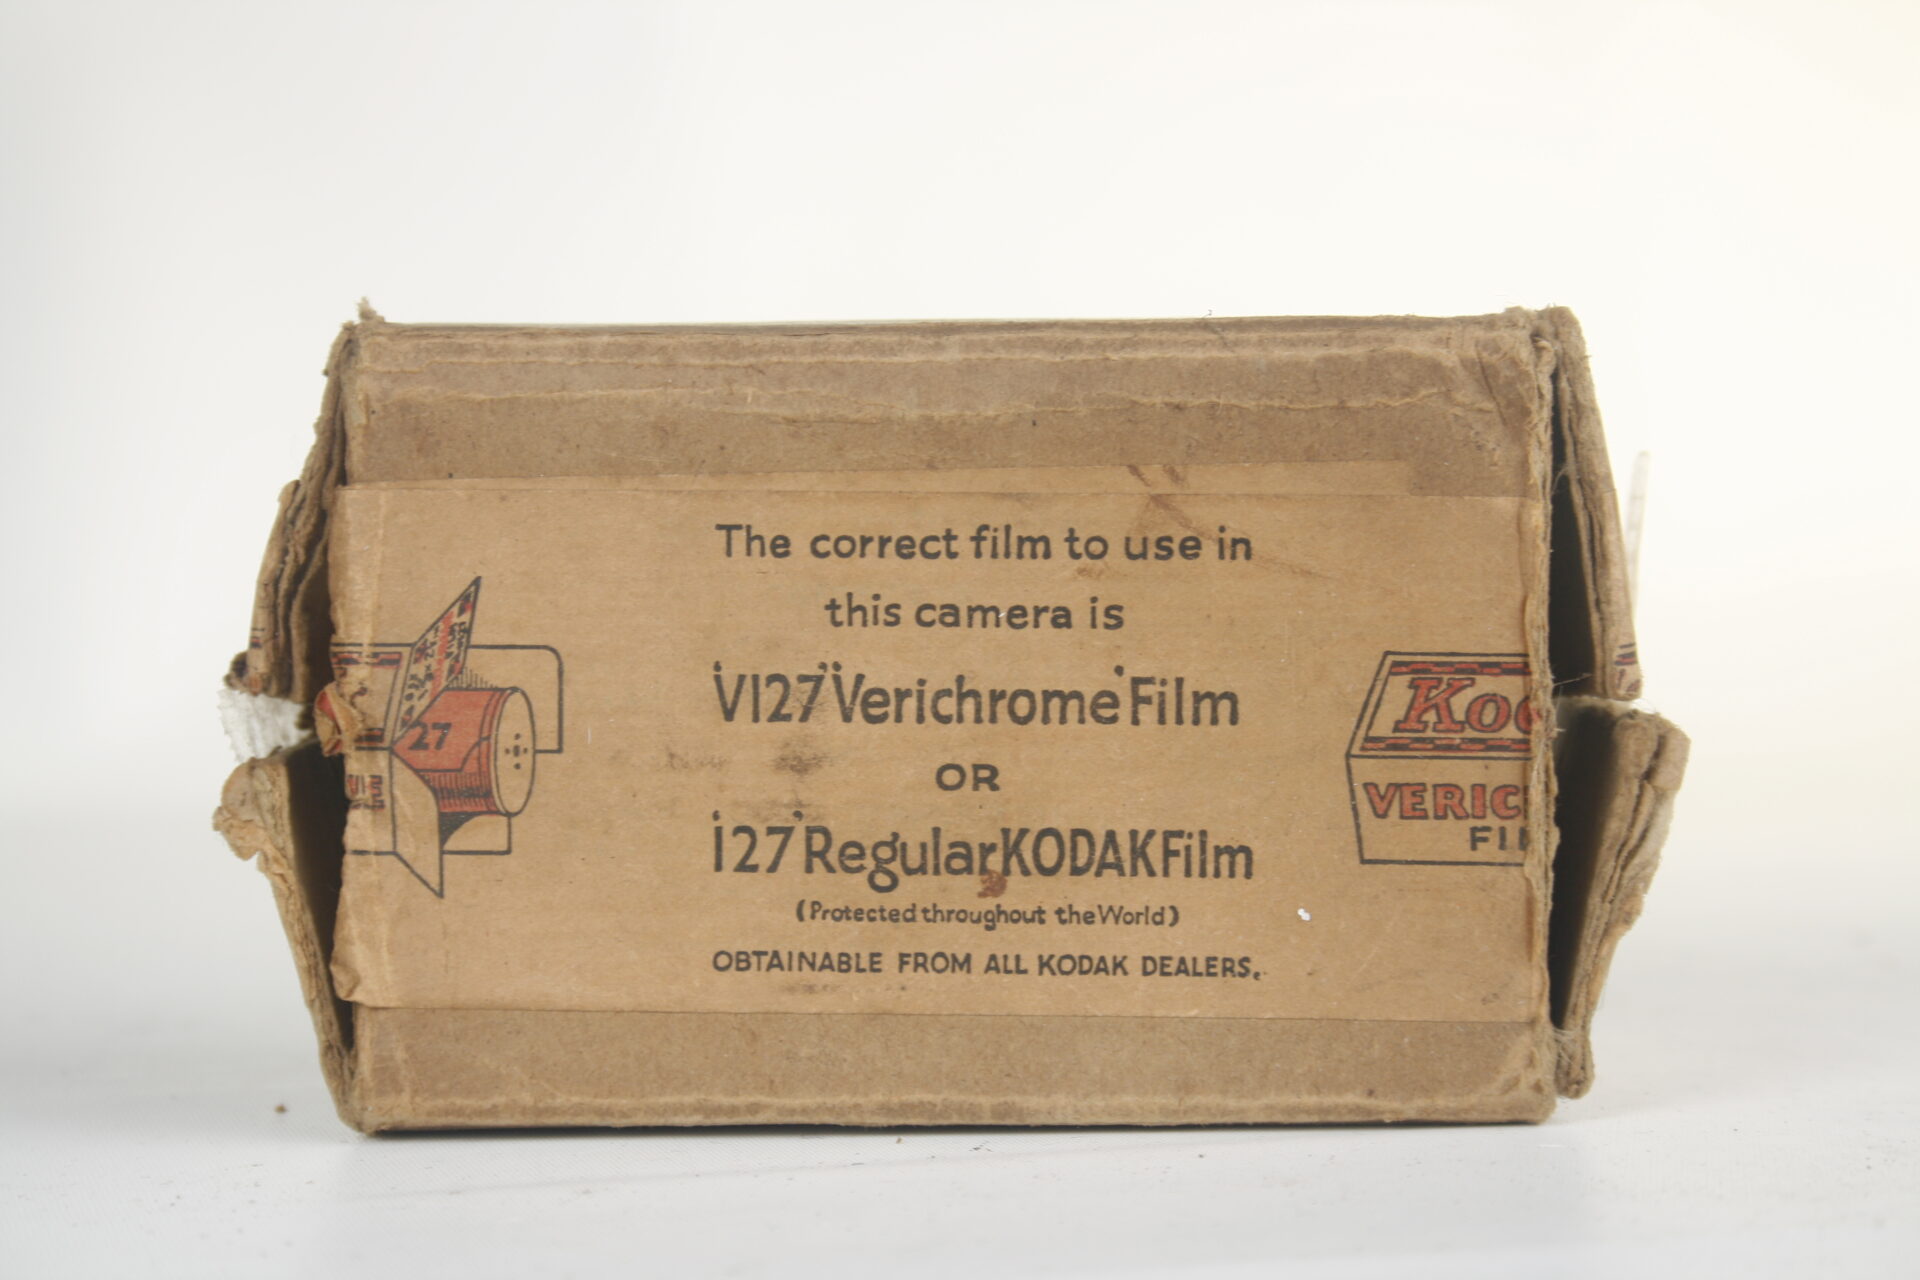 Kodak V127 Verichrome film of 127 Regulaire Kodak film